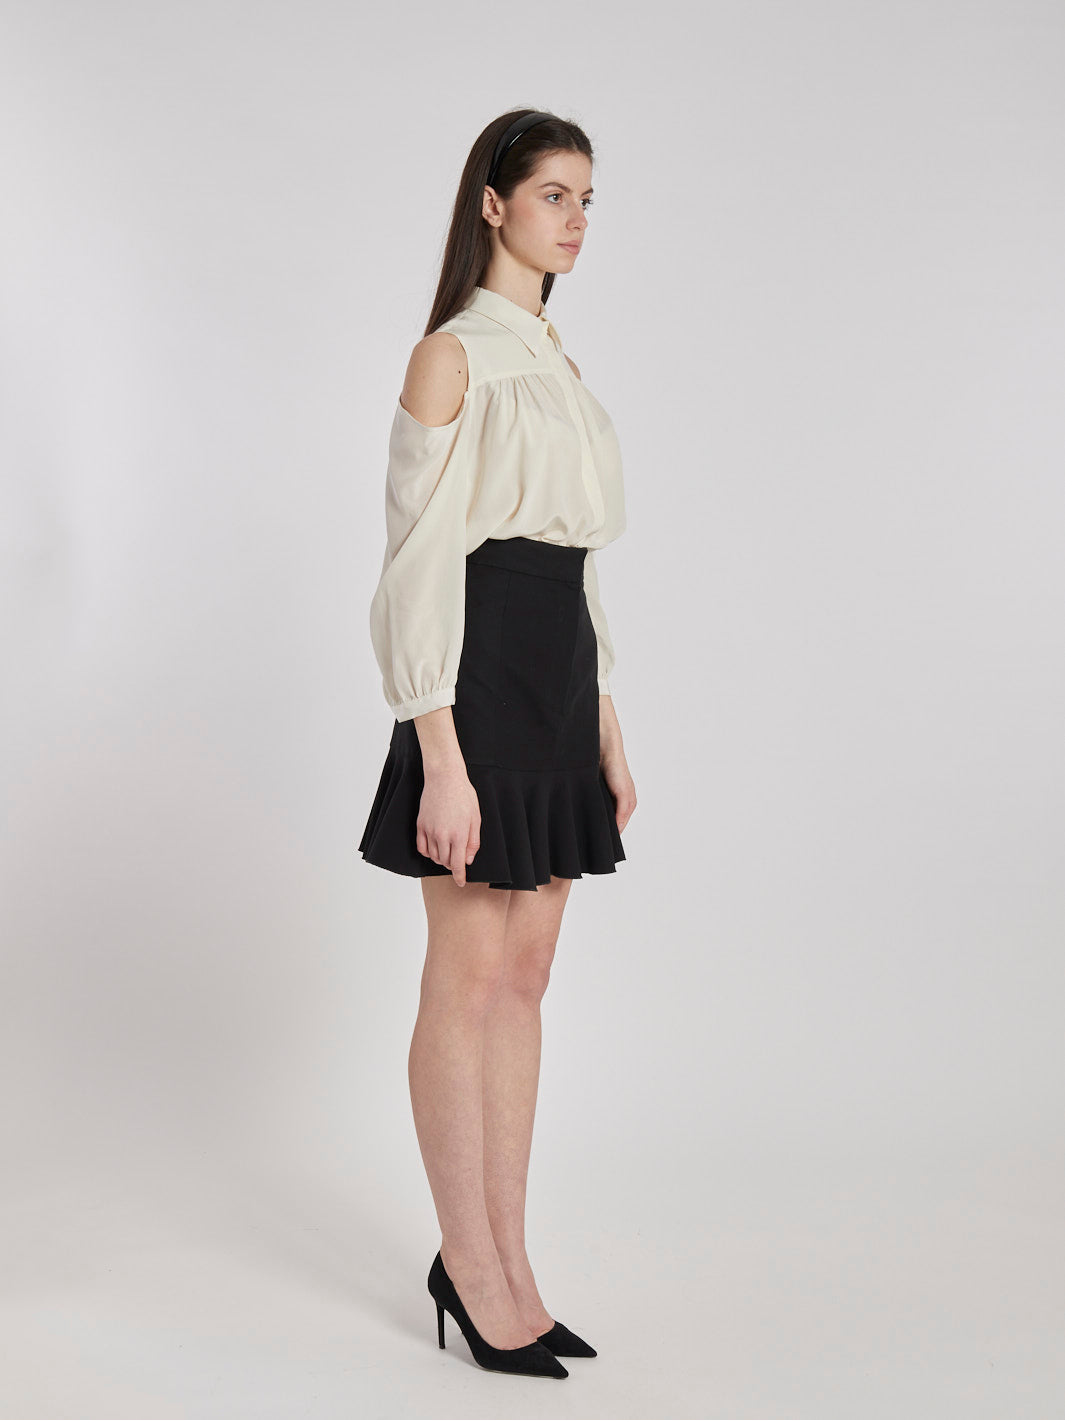 2010 Victoria Beckham black cotton mini skirt with ruffle